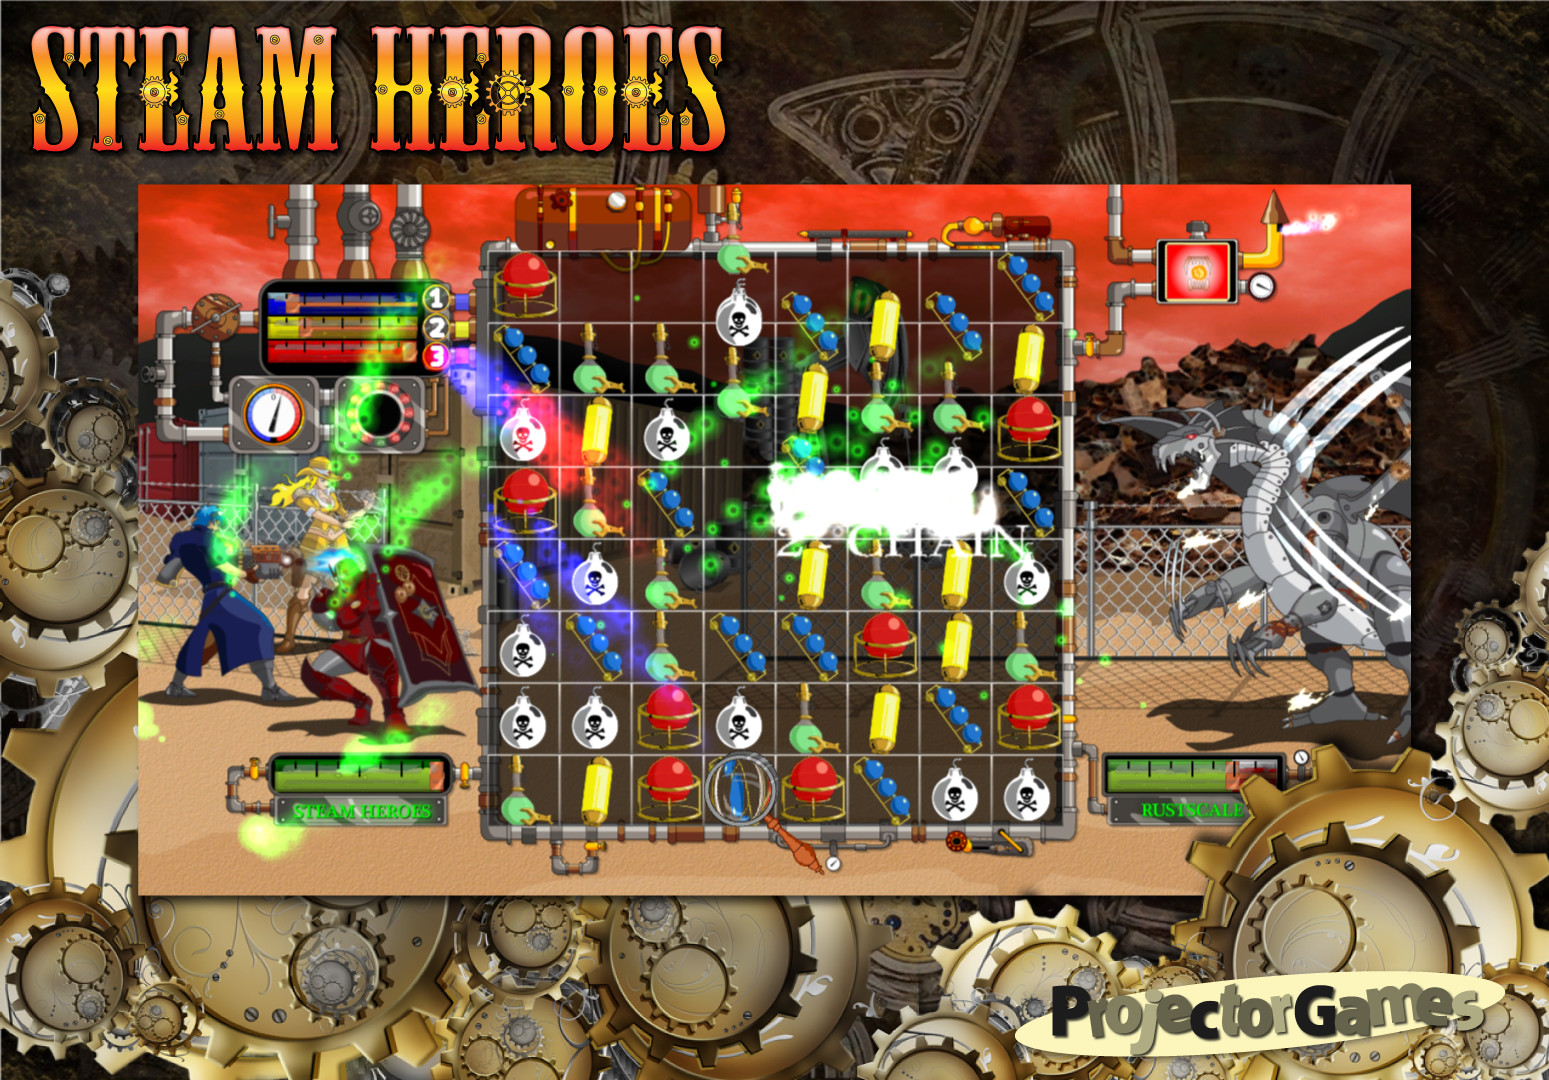 free download heroes 6 steam